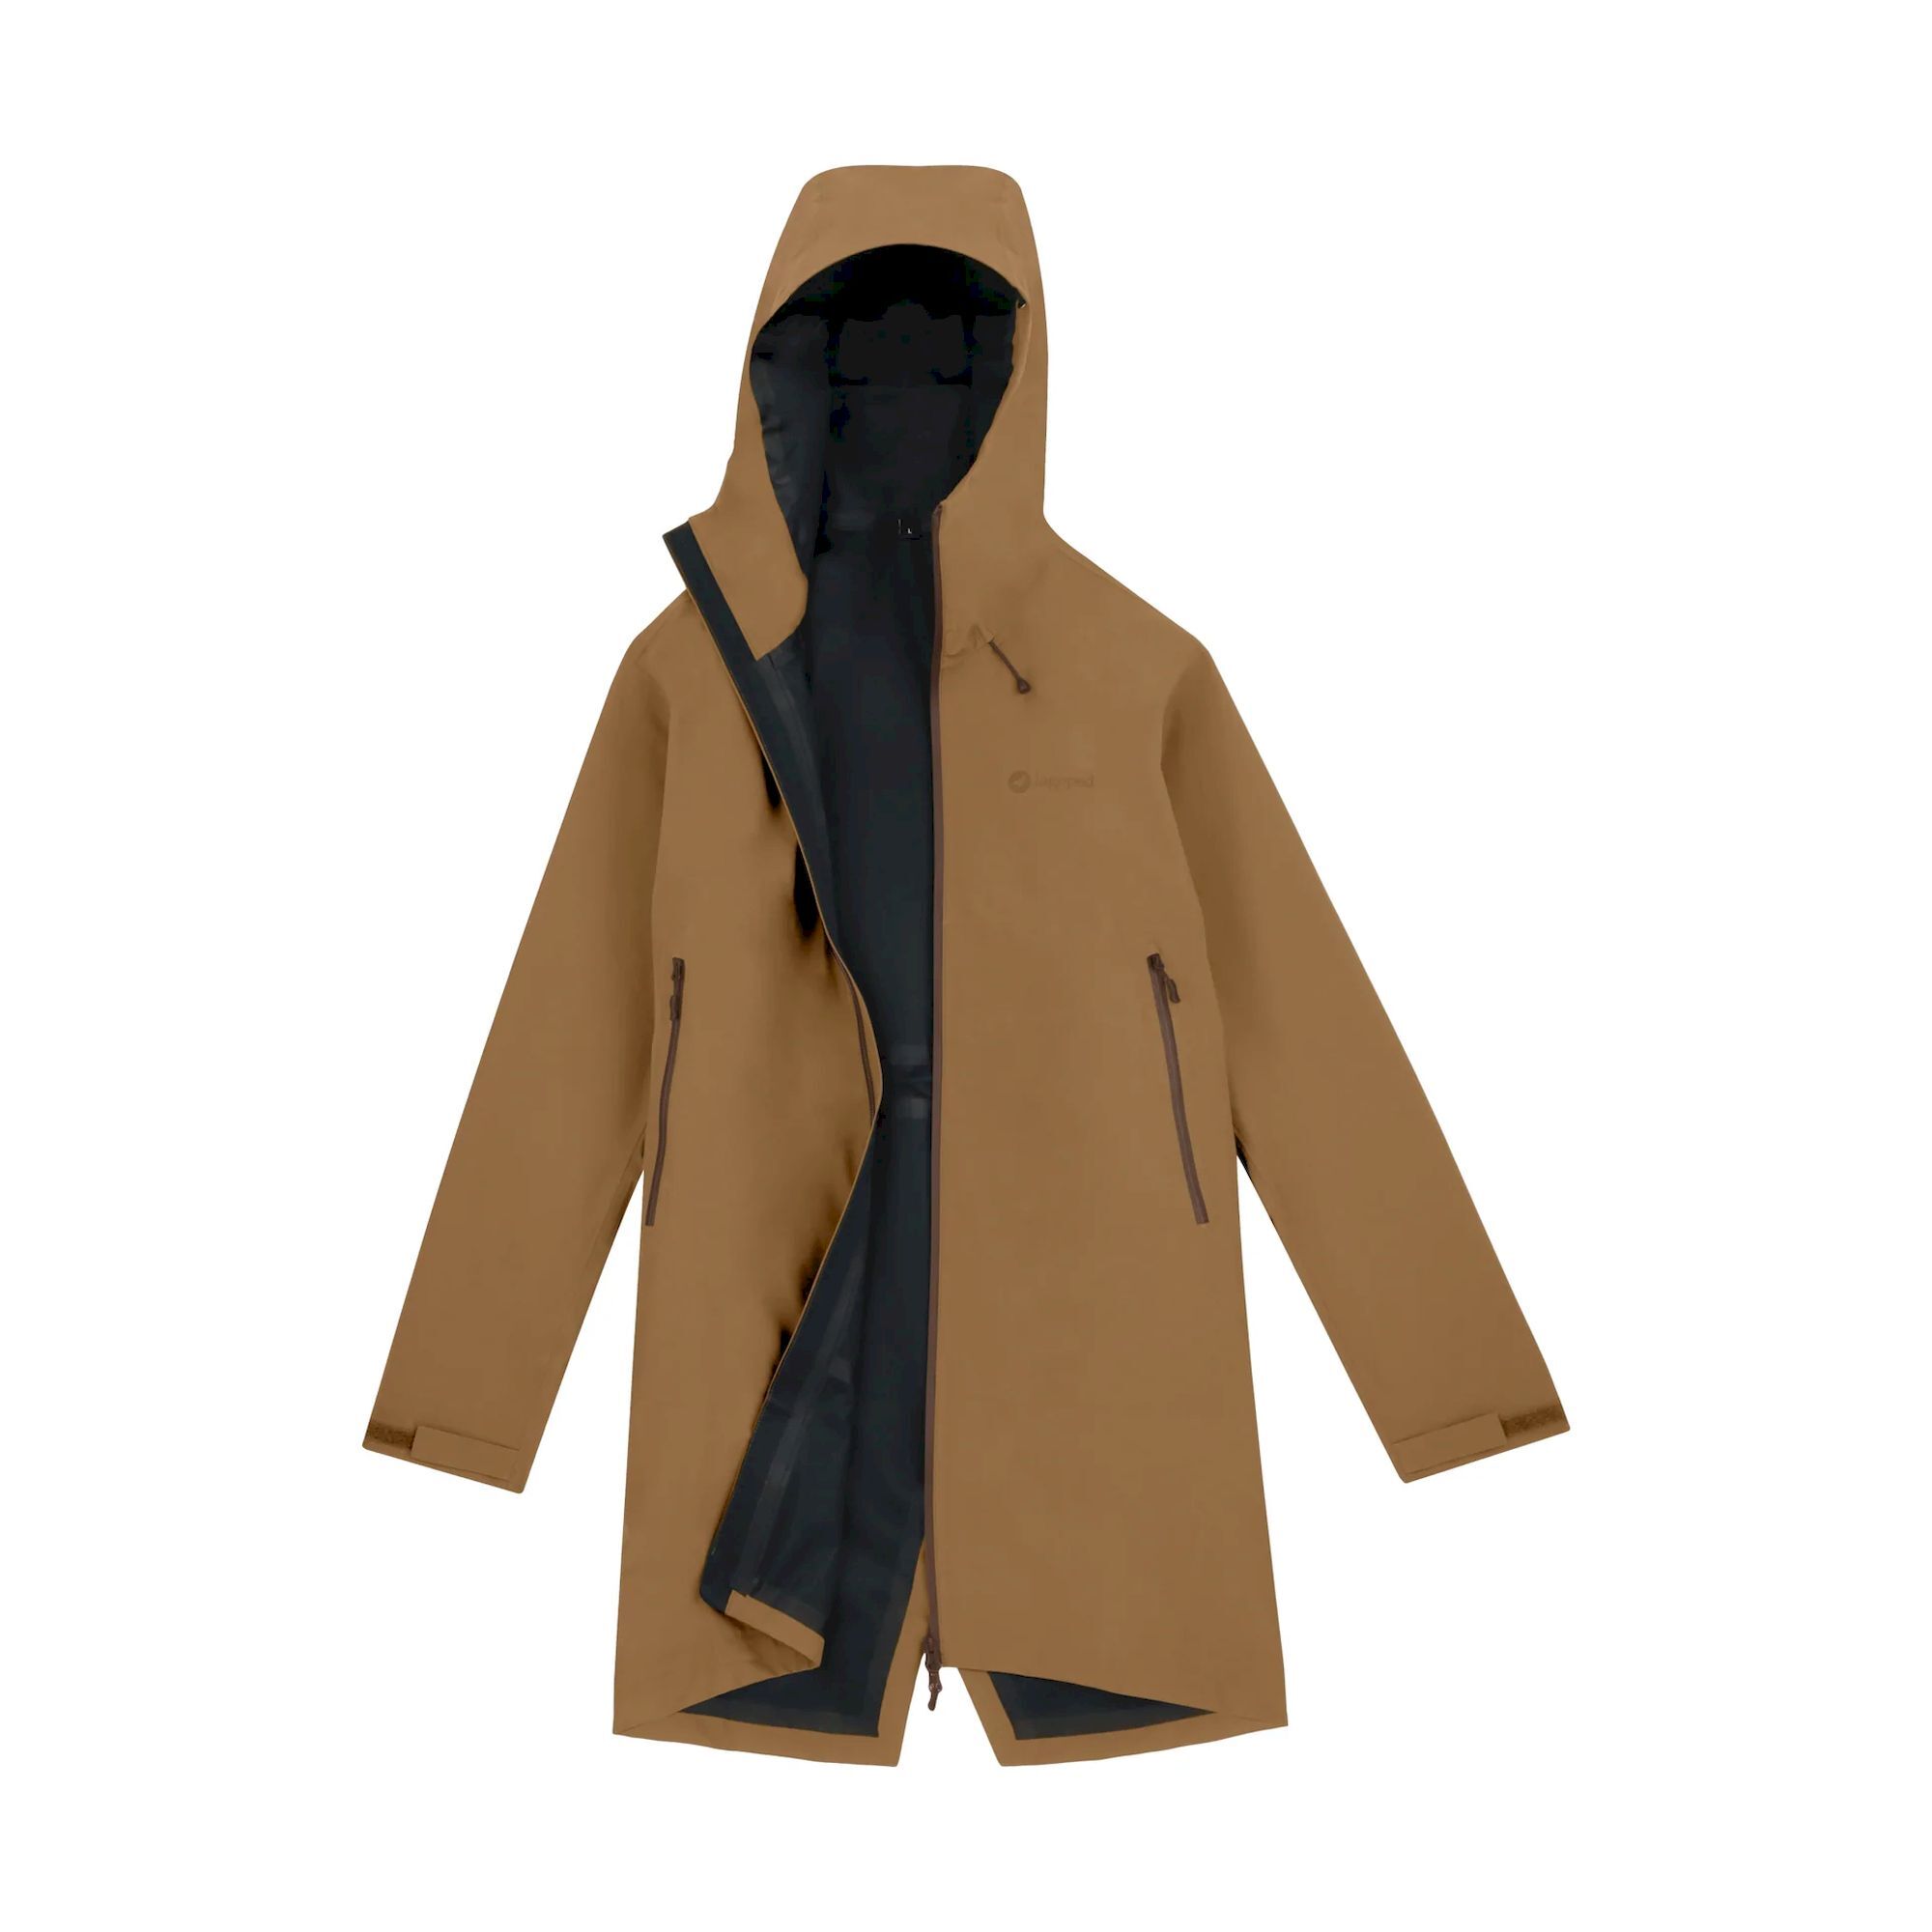 Lagoped Grand Tetras - Waterproof jacket - Men's